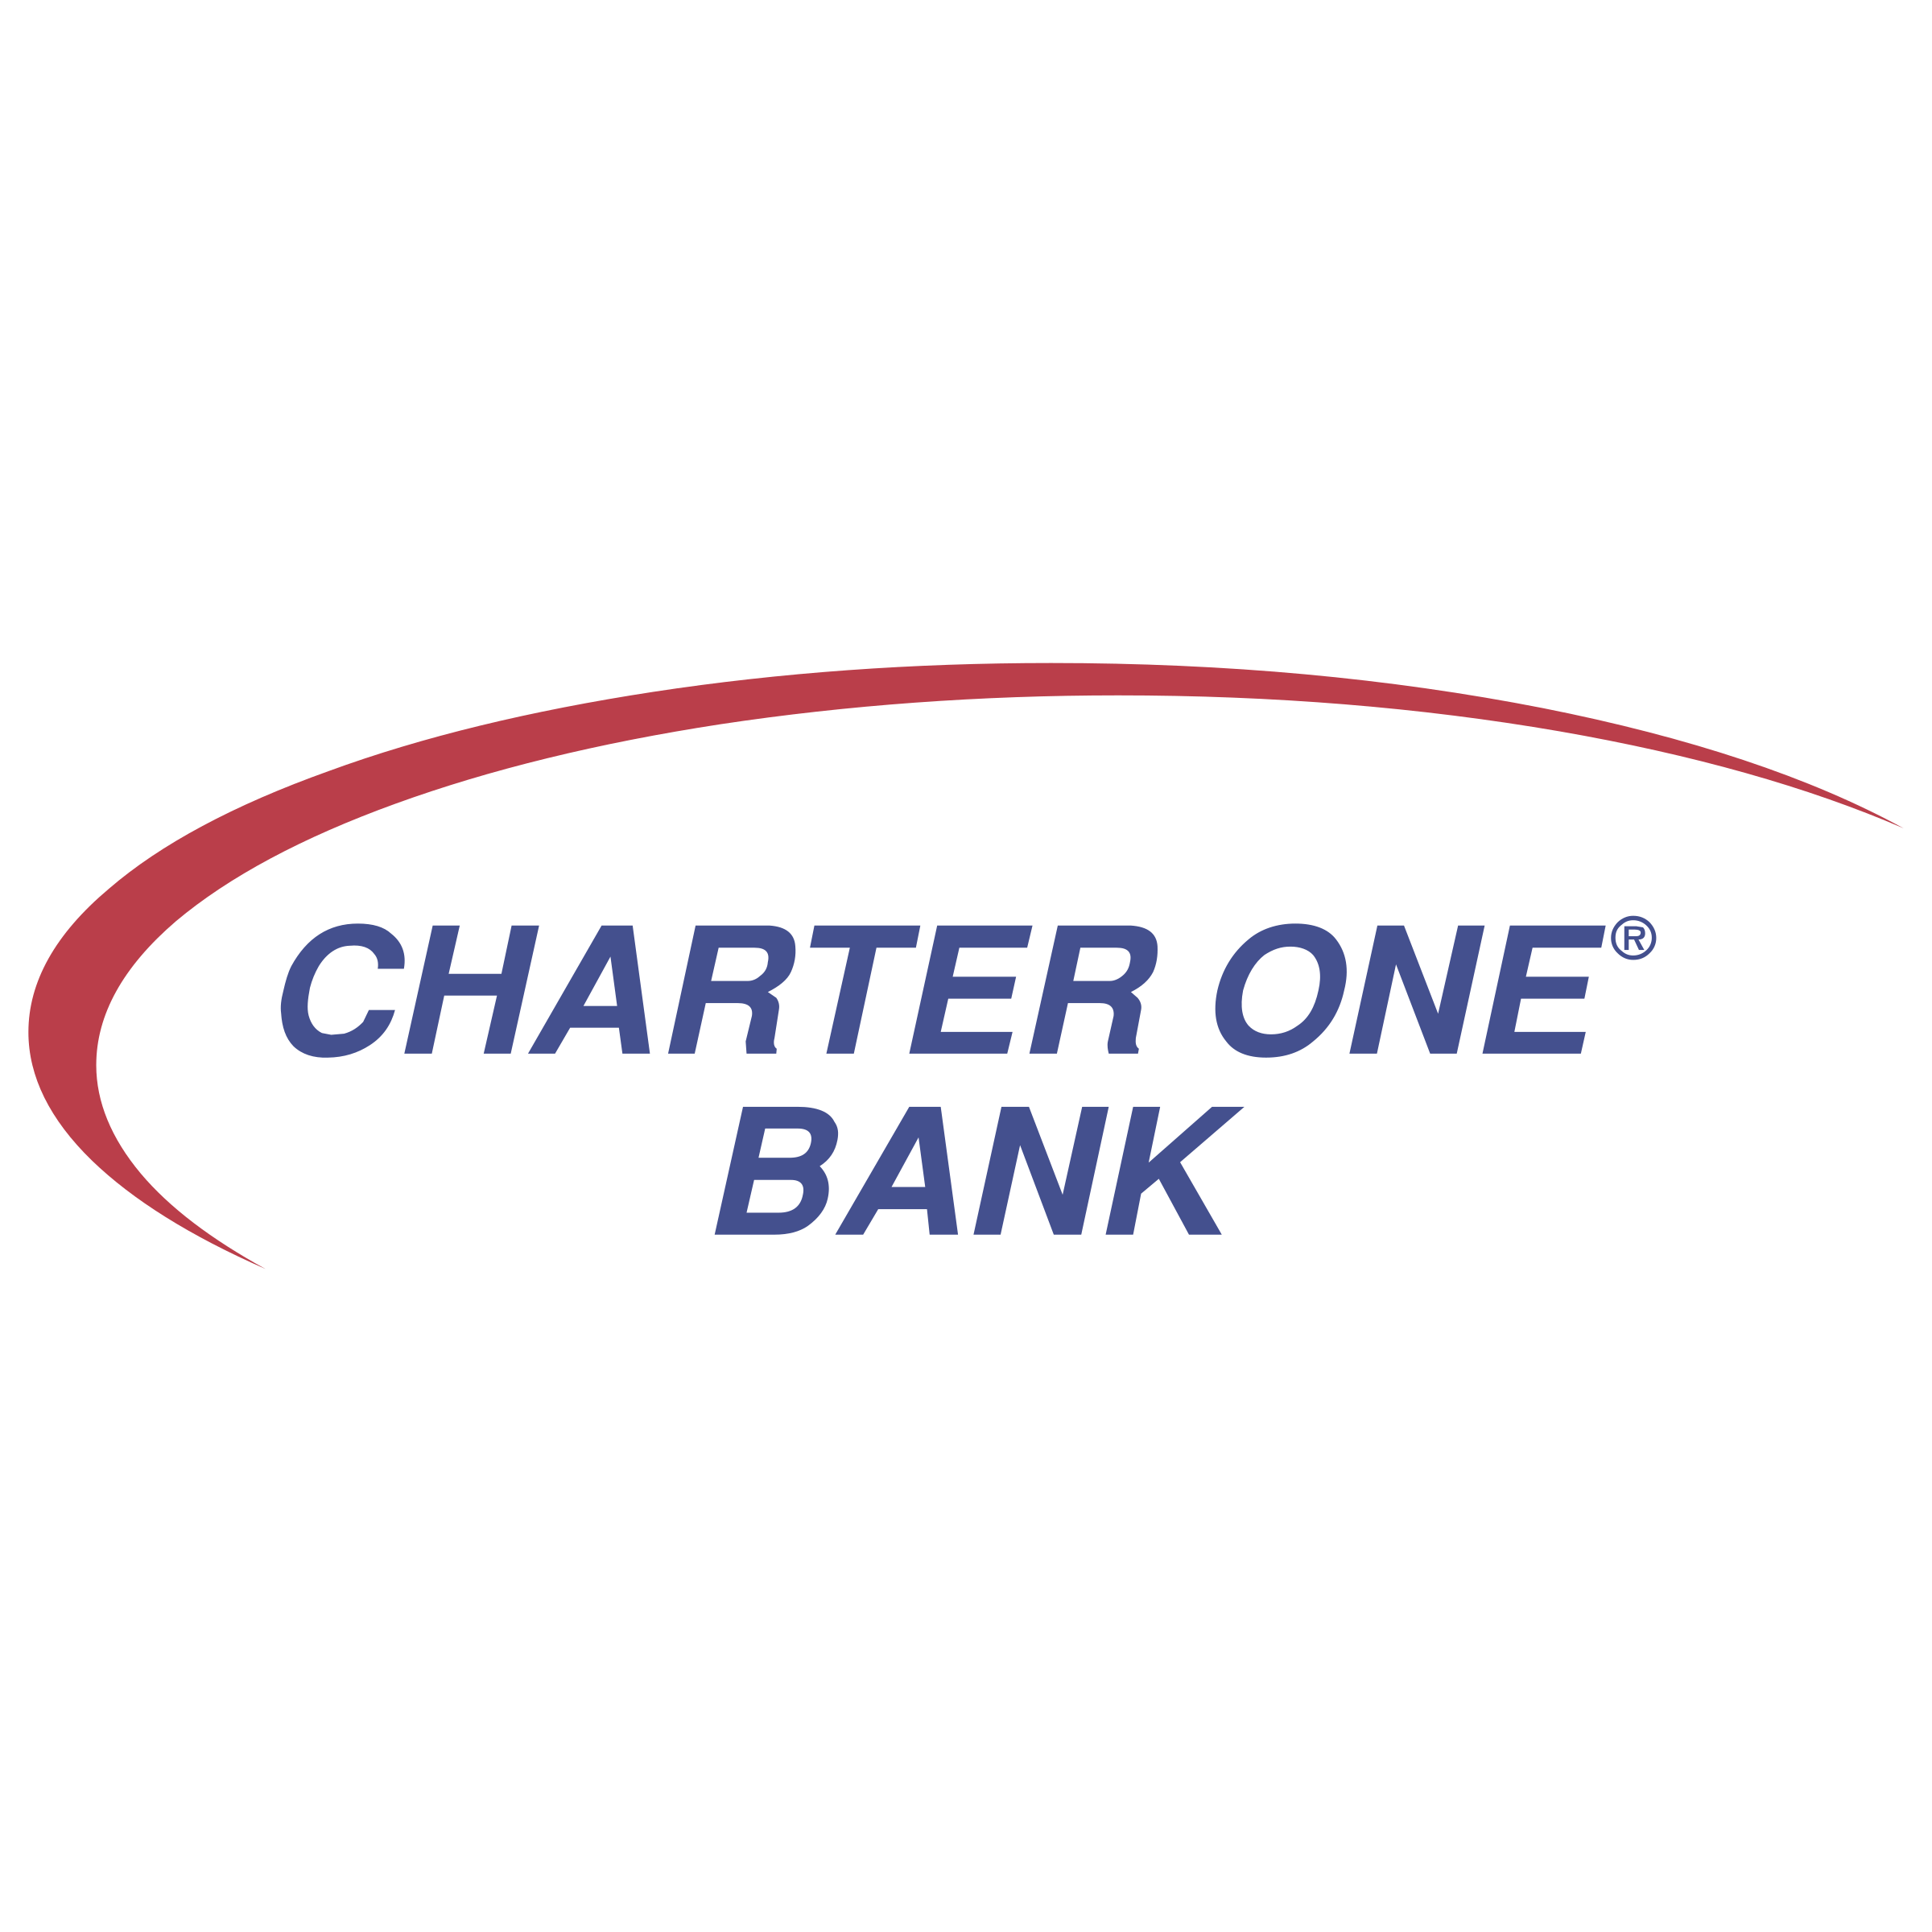 Charter Logo - Charter One Bank Logo PNG Transparent & SVG Vector